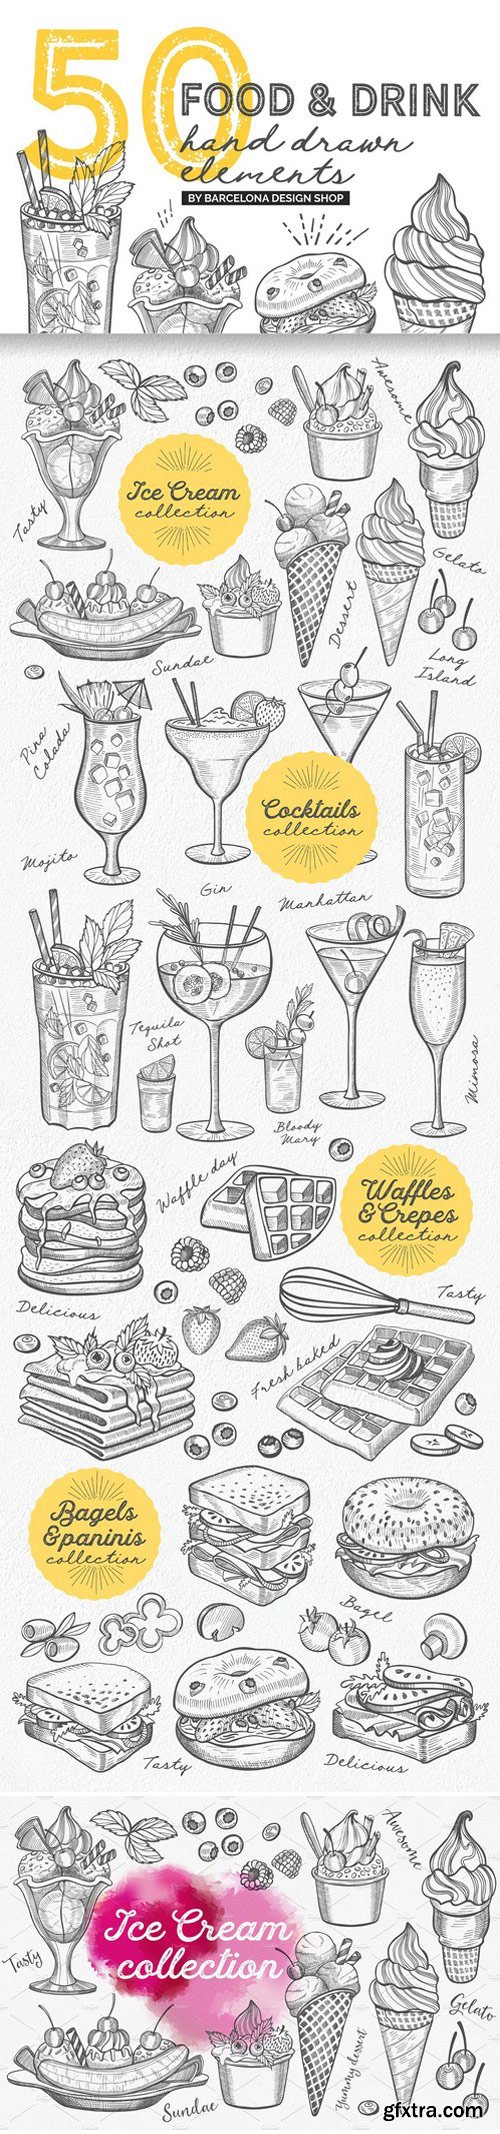 CM - Food & Drink Illustrations 2379402